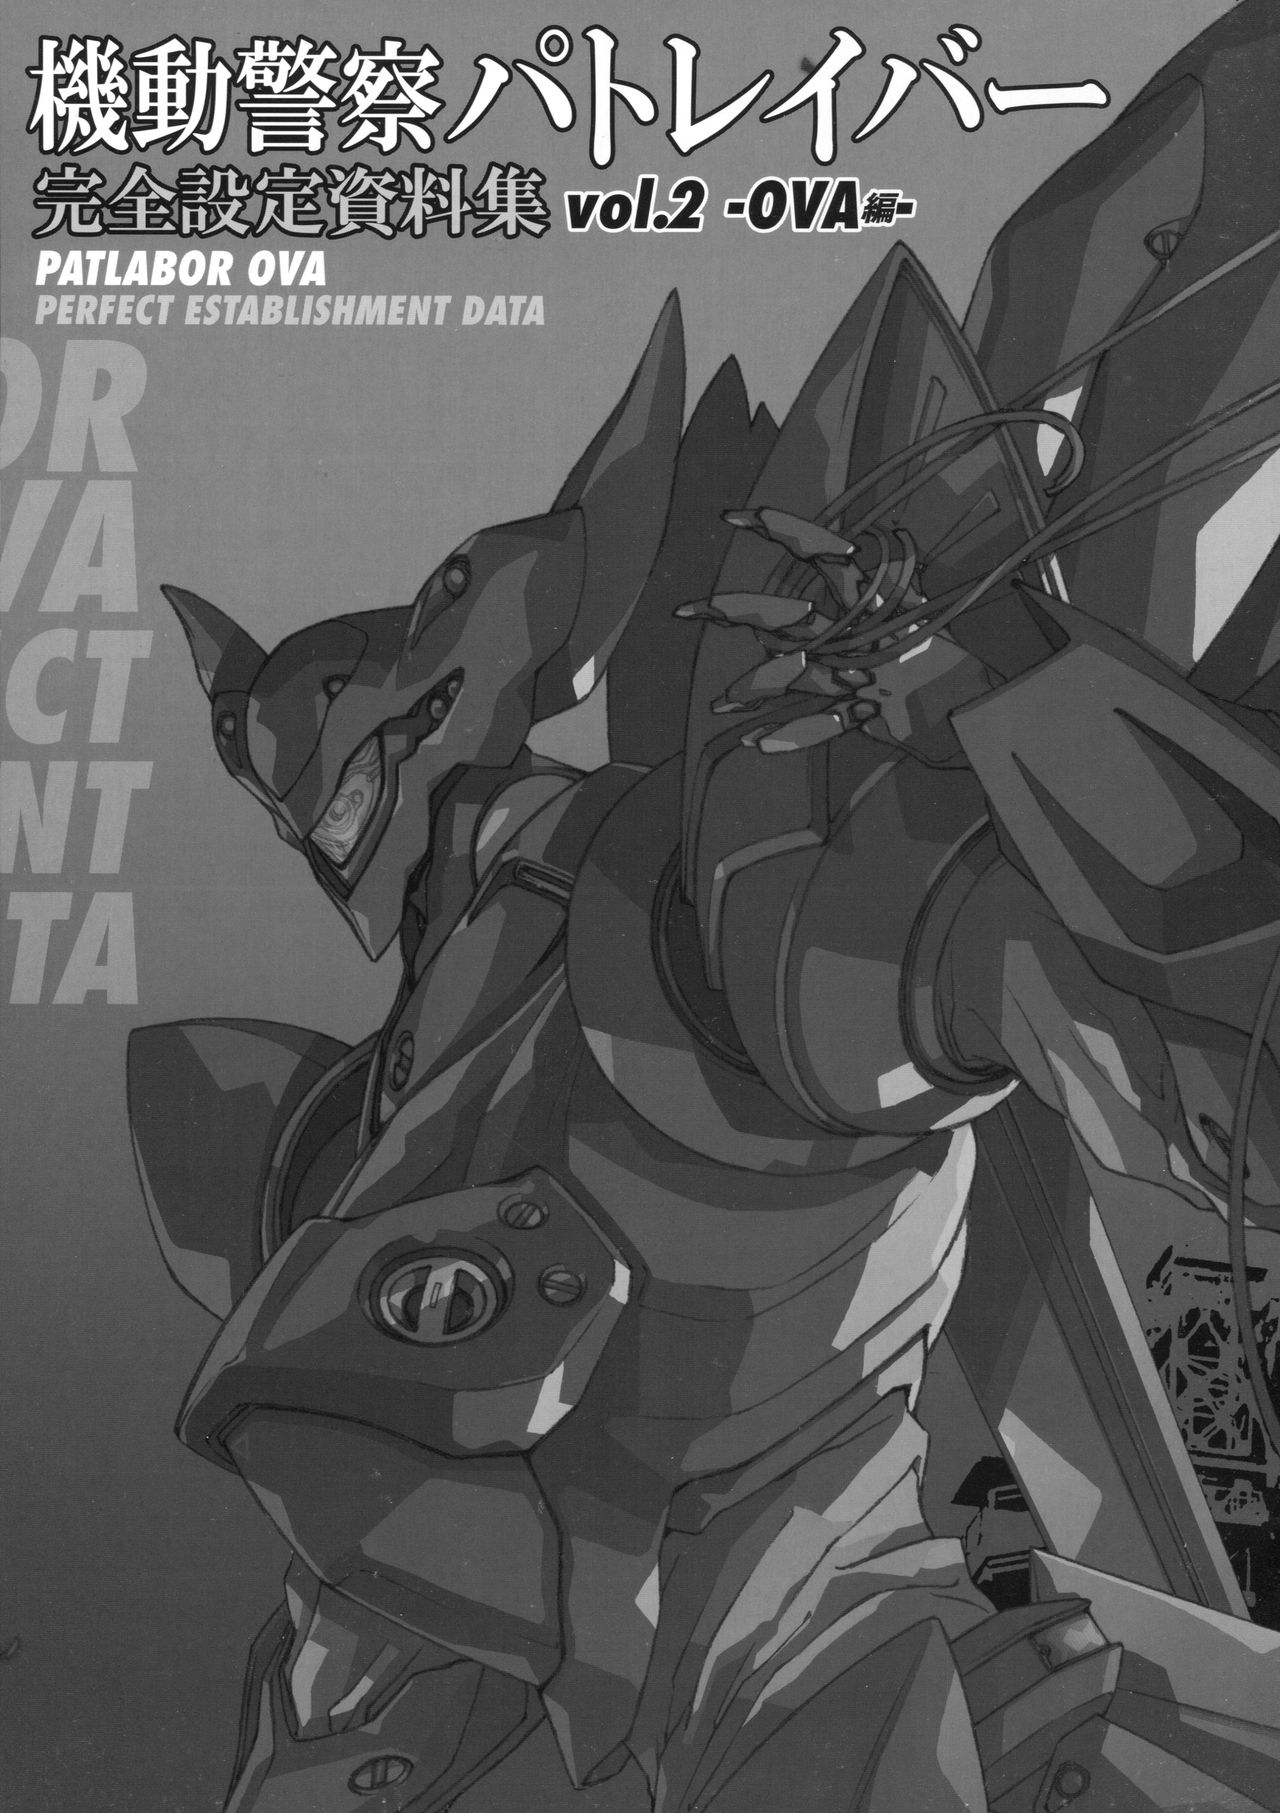 Patlabor: Perfect Establishment Data Vol.2 - OVA 3